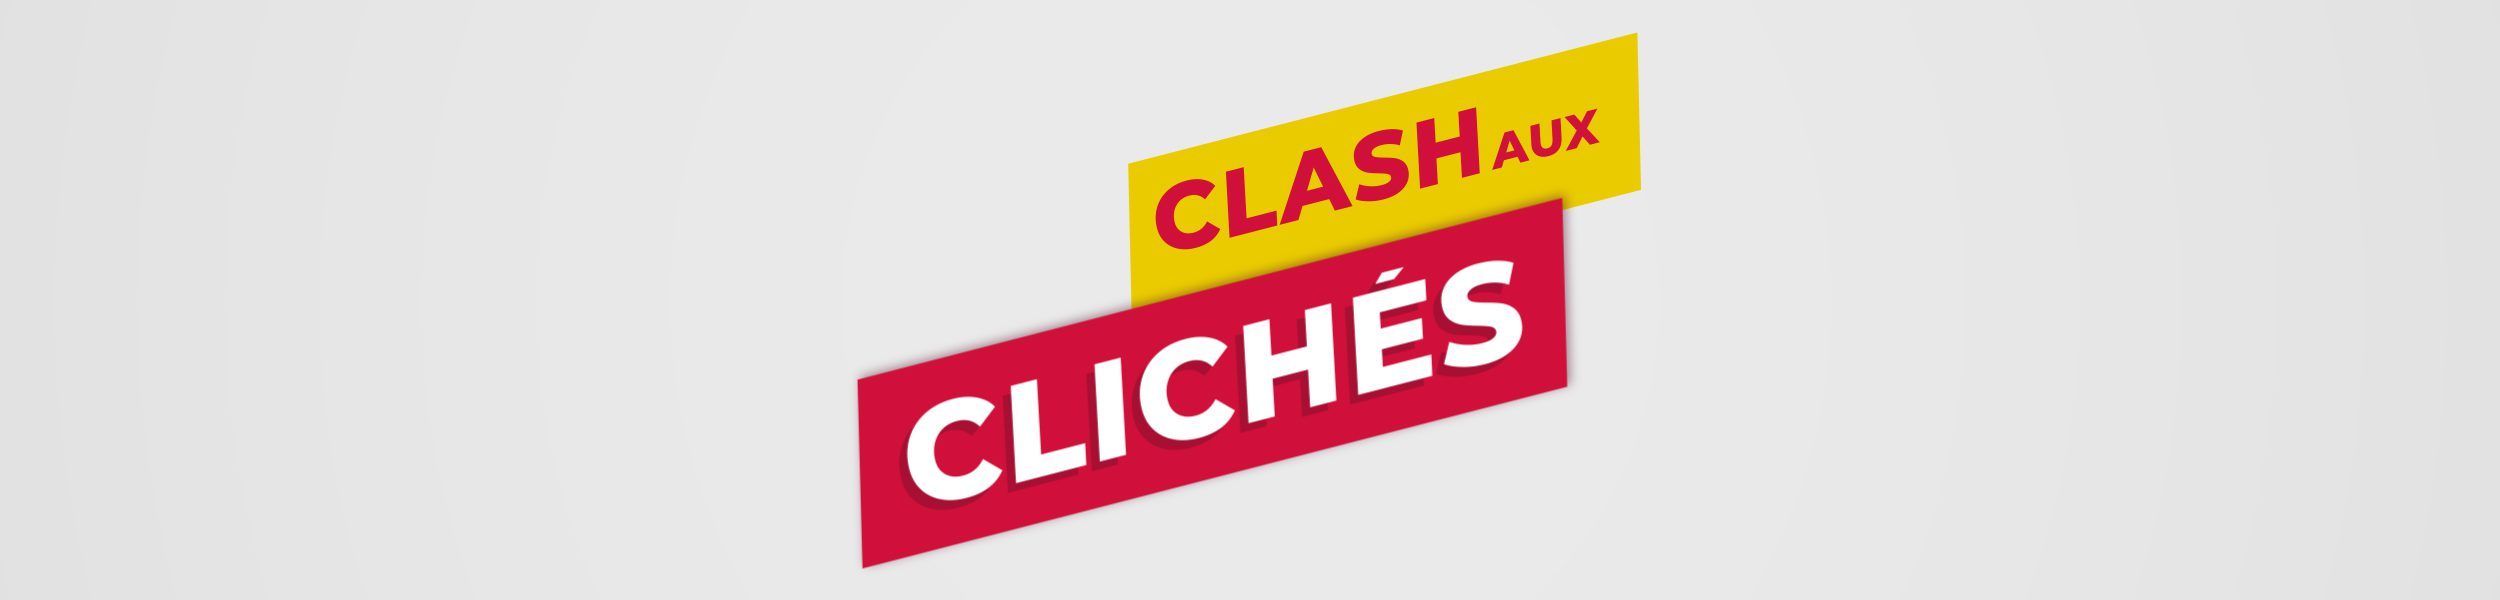 ClashauxClichés web